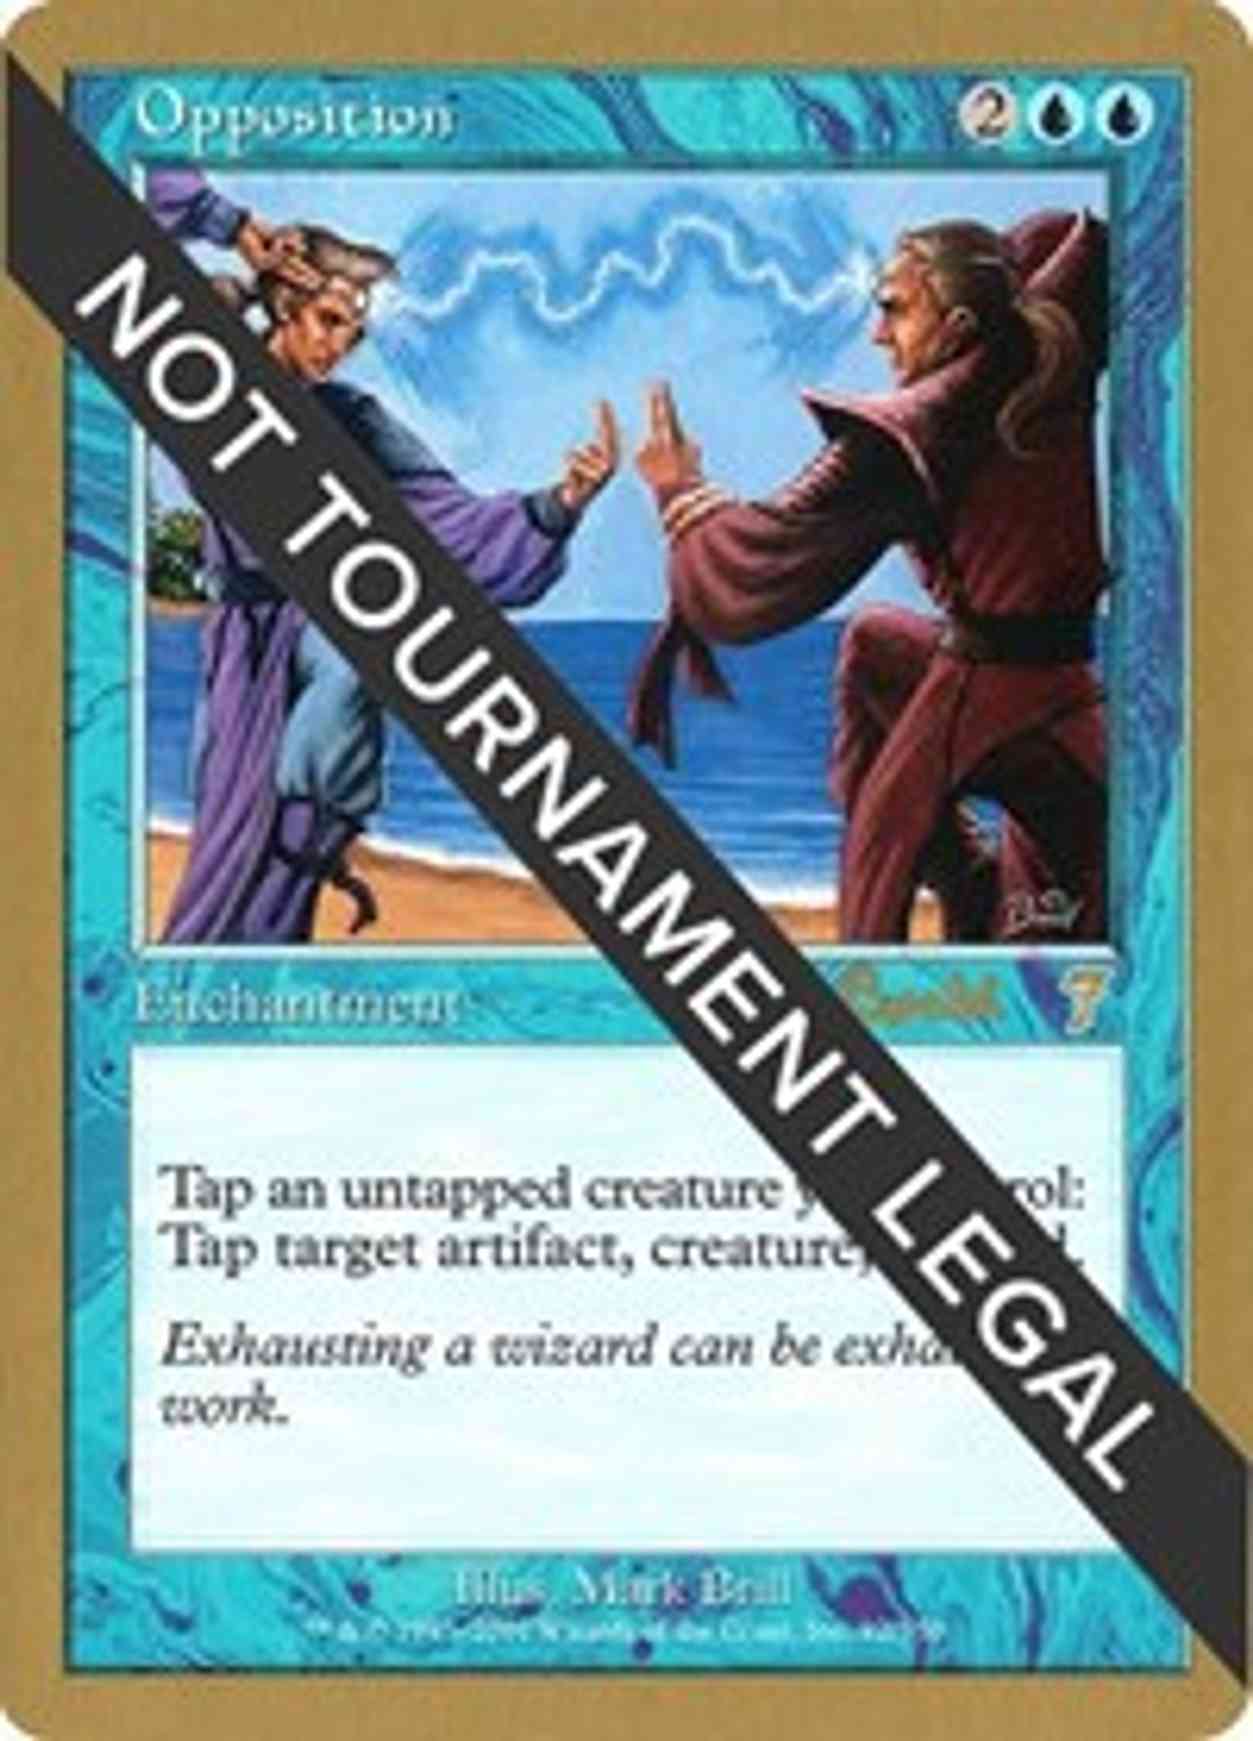 Opposition - 2001 Alex Borteh (7ED) magic card front